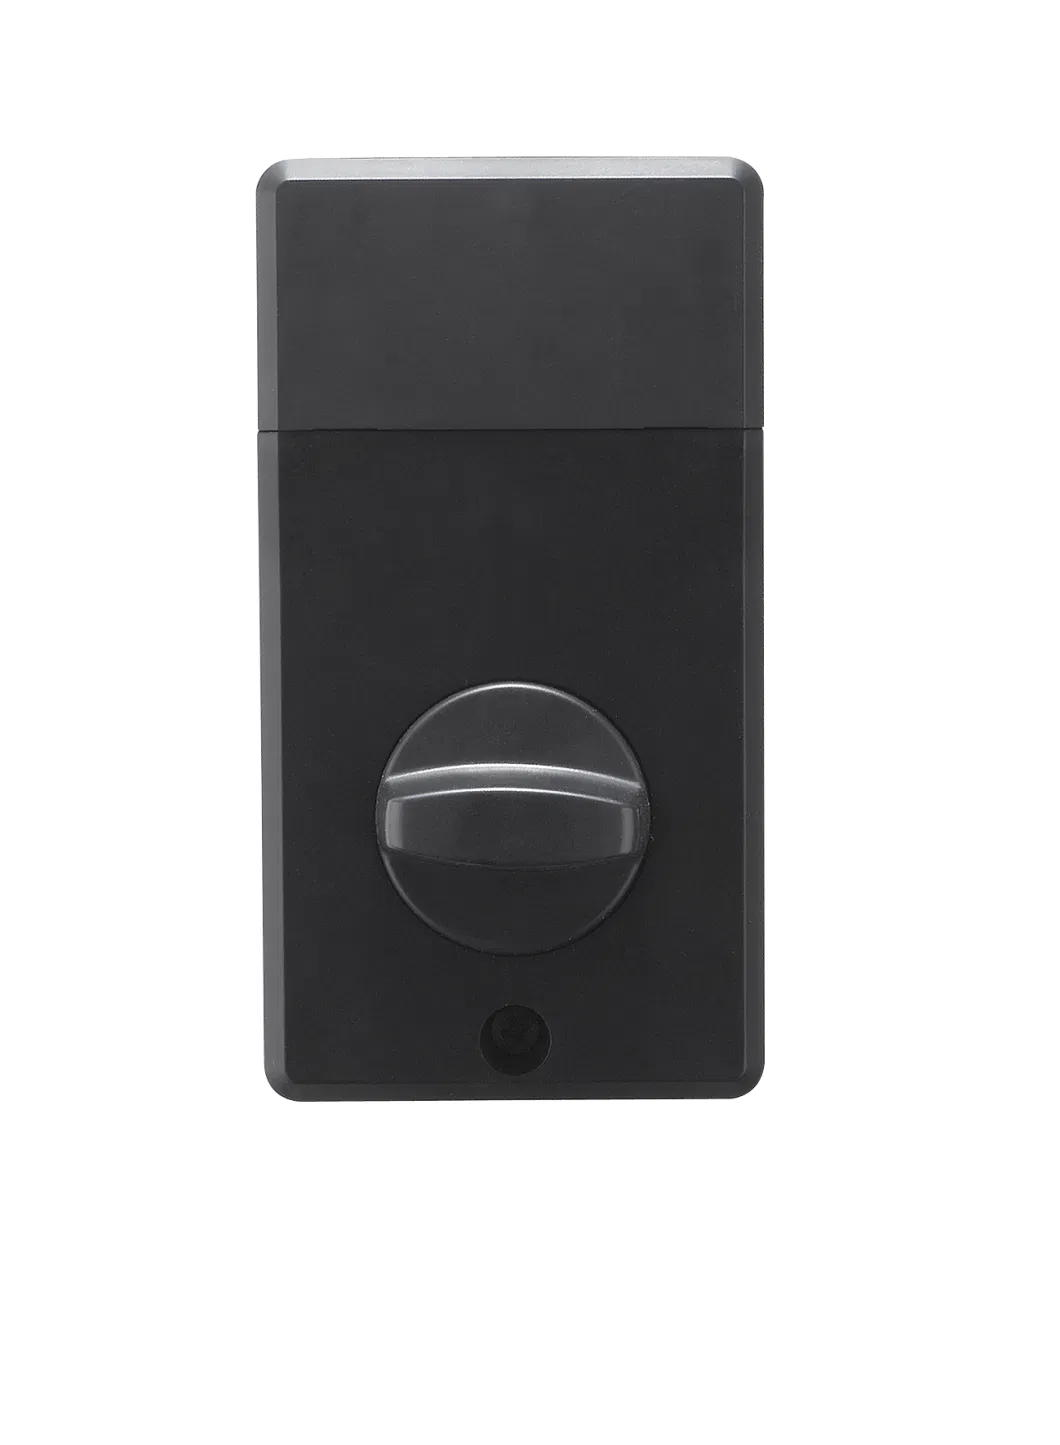 Maxal Smart Lock Electronic Fingerprint Identification Use Fingerprint to Unlock Door Lock